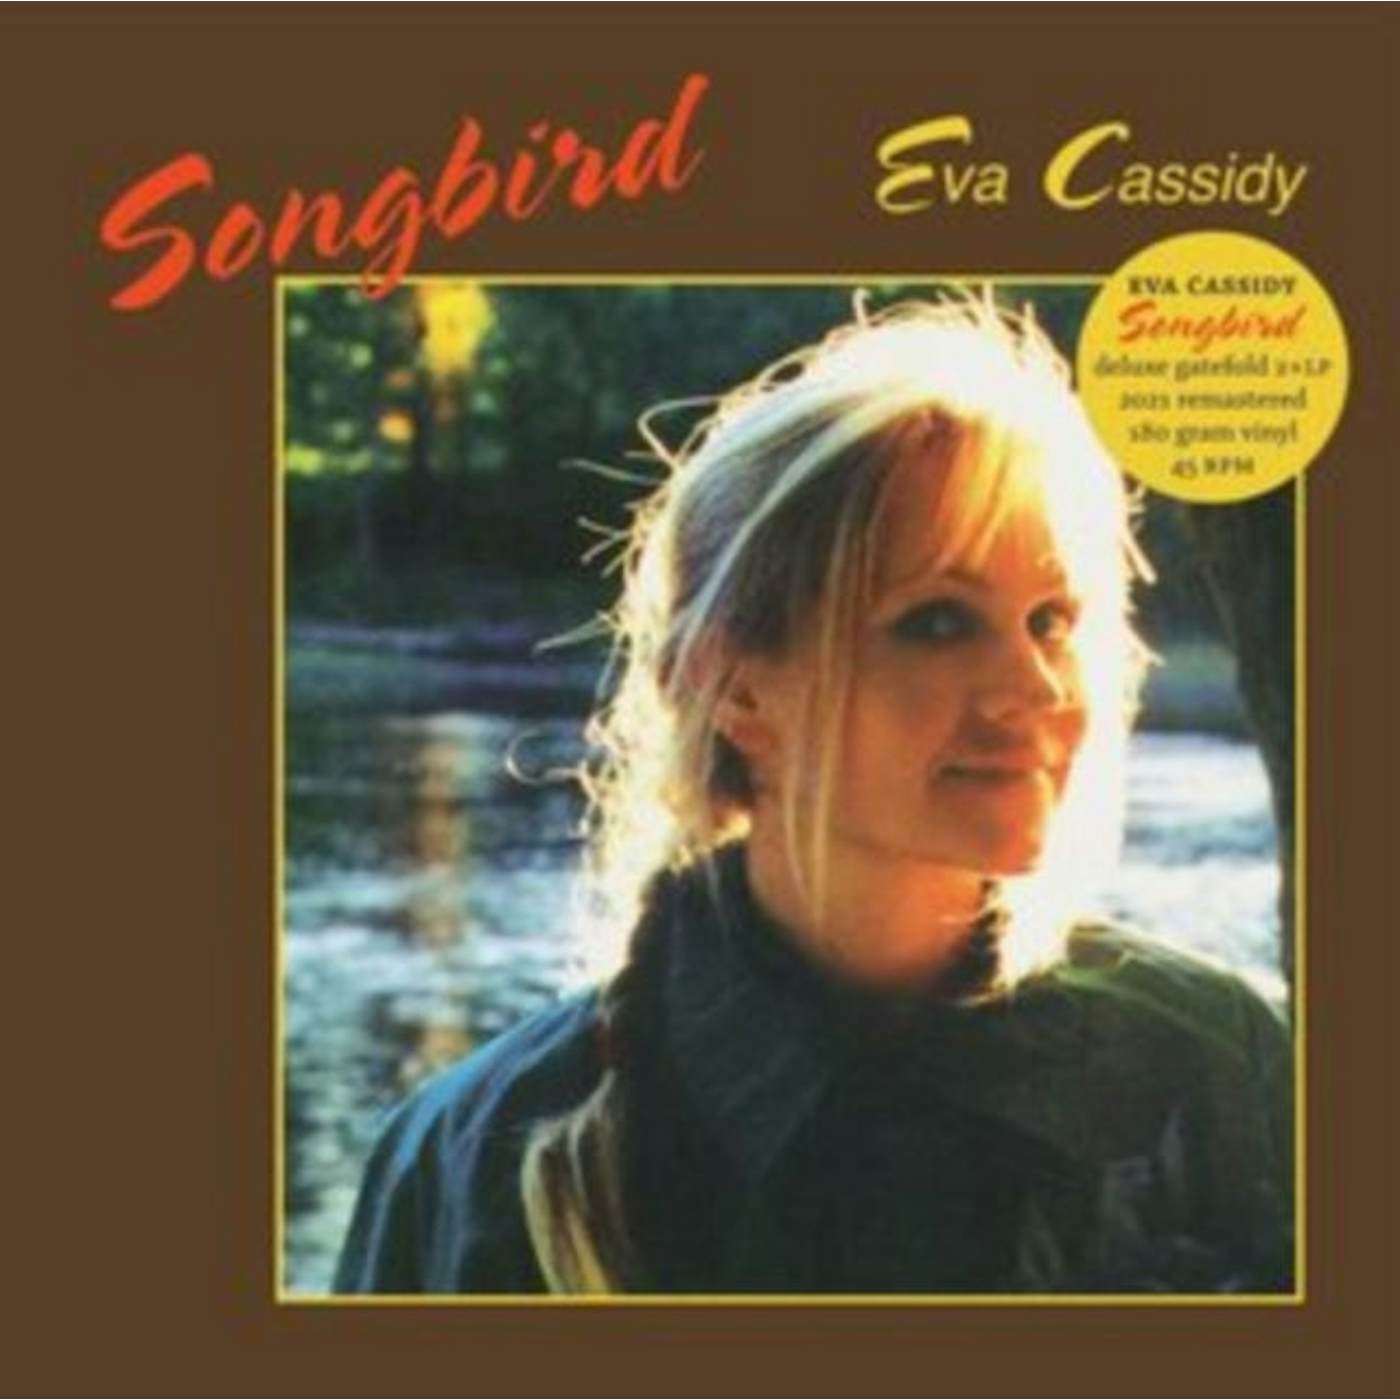 Eva Cassidy LP Vinyl Record - Songbird (Deluxe Edition)